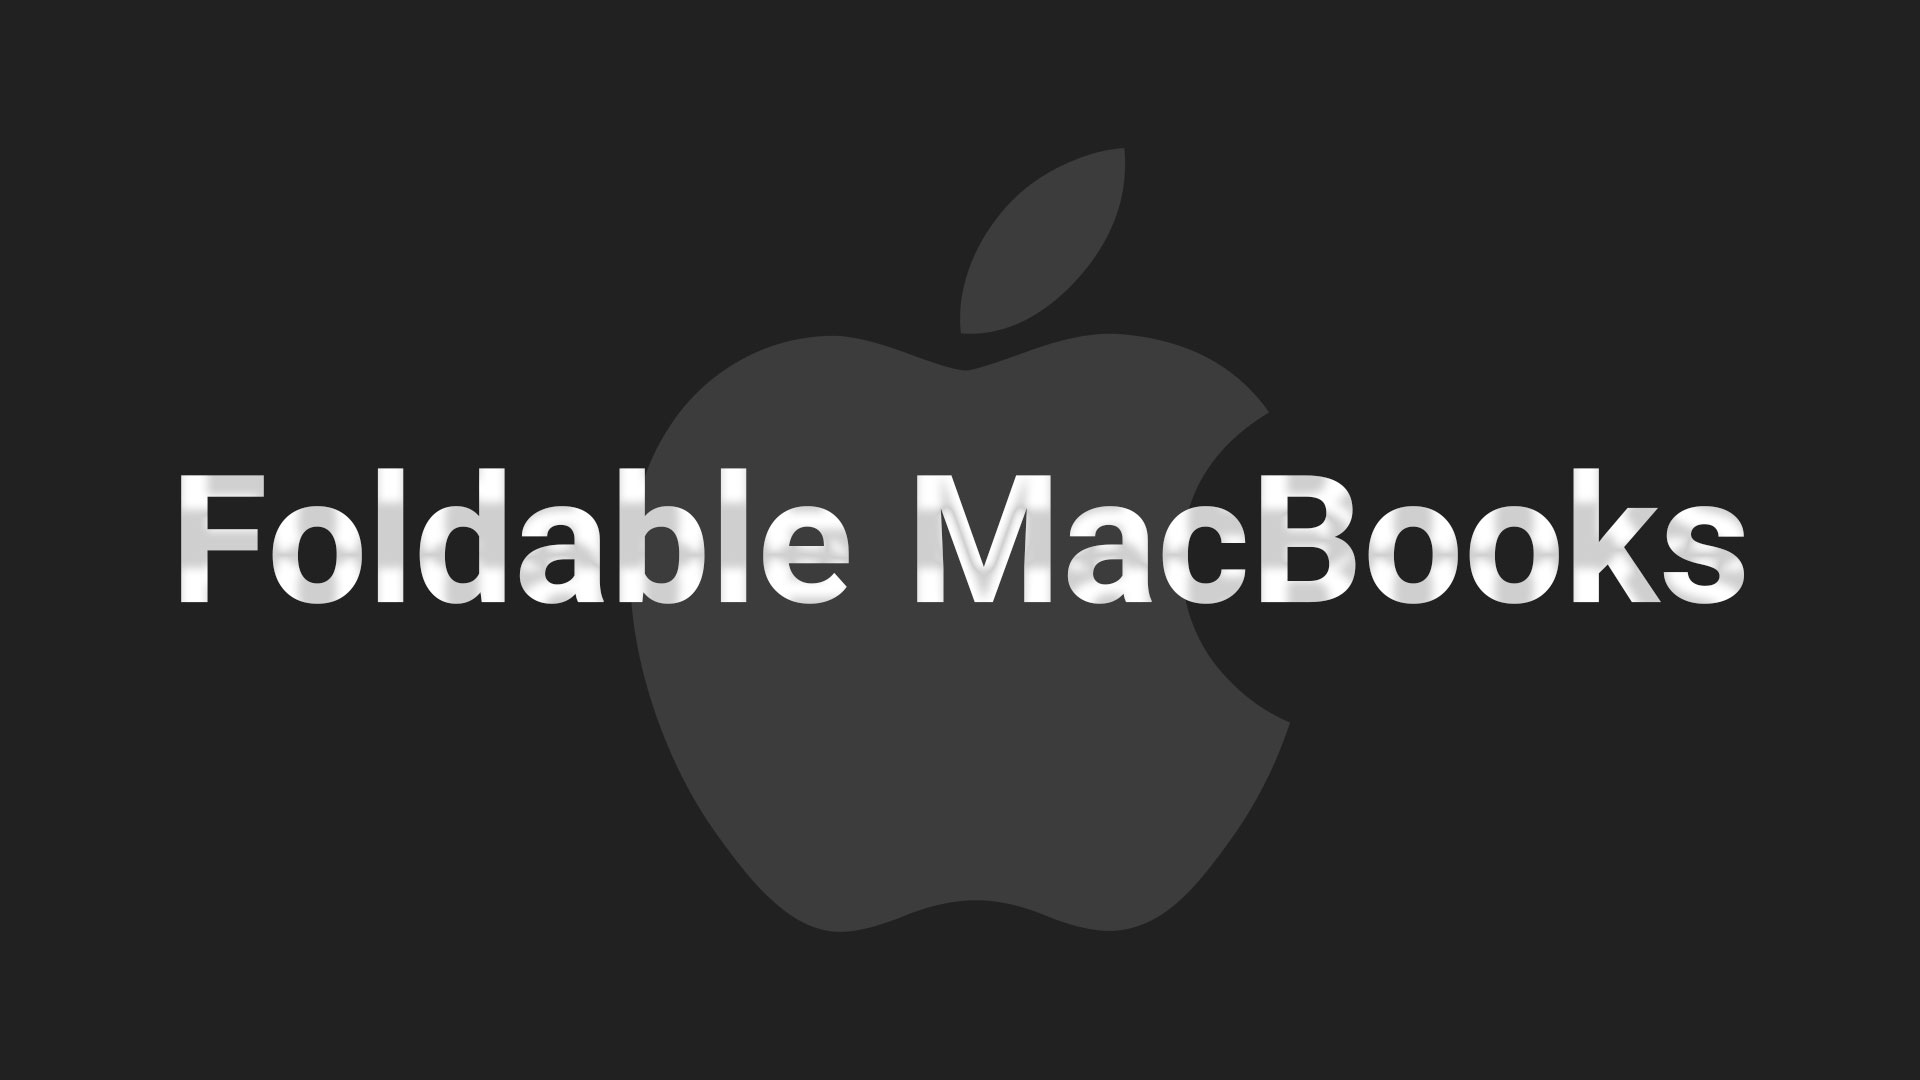 Foldable MacBooks